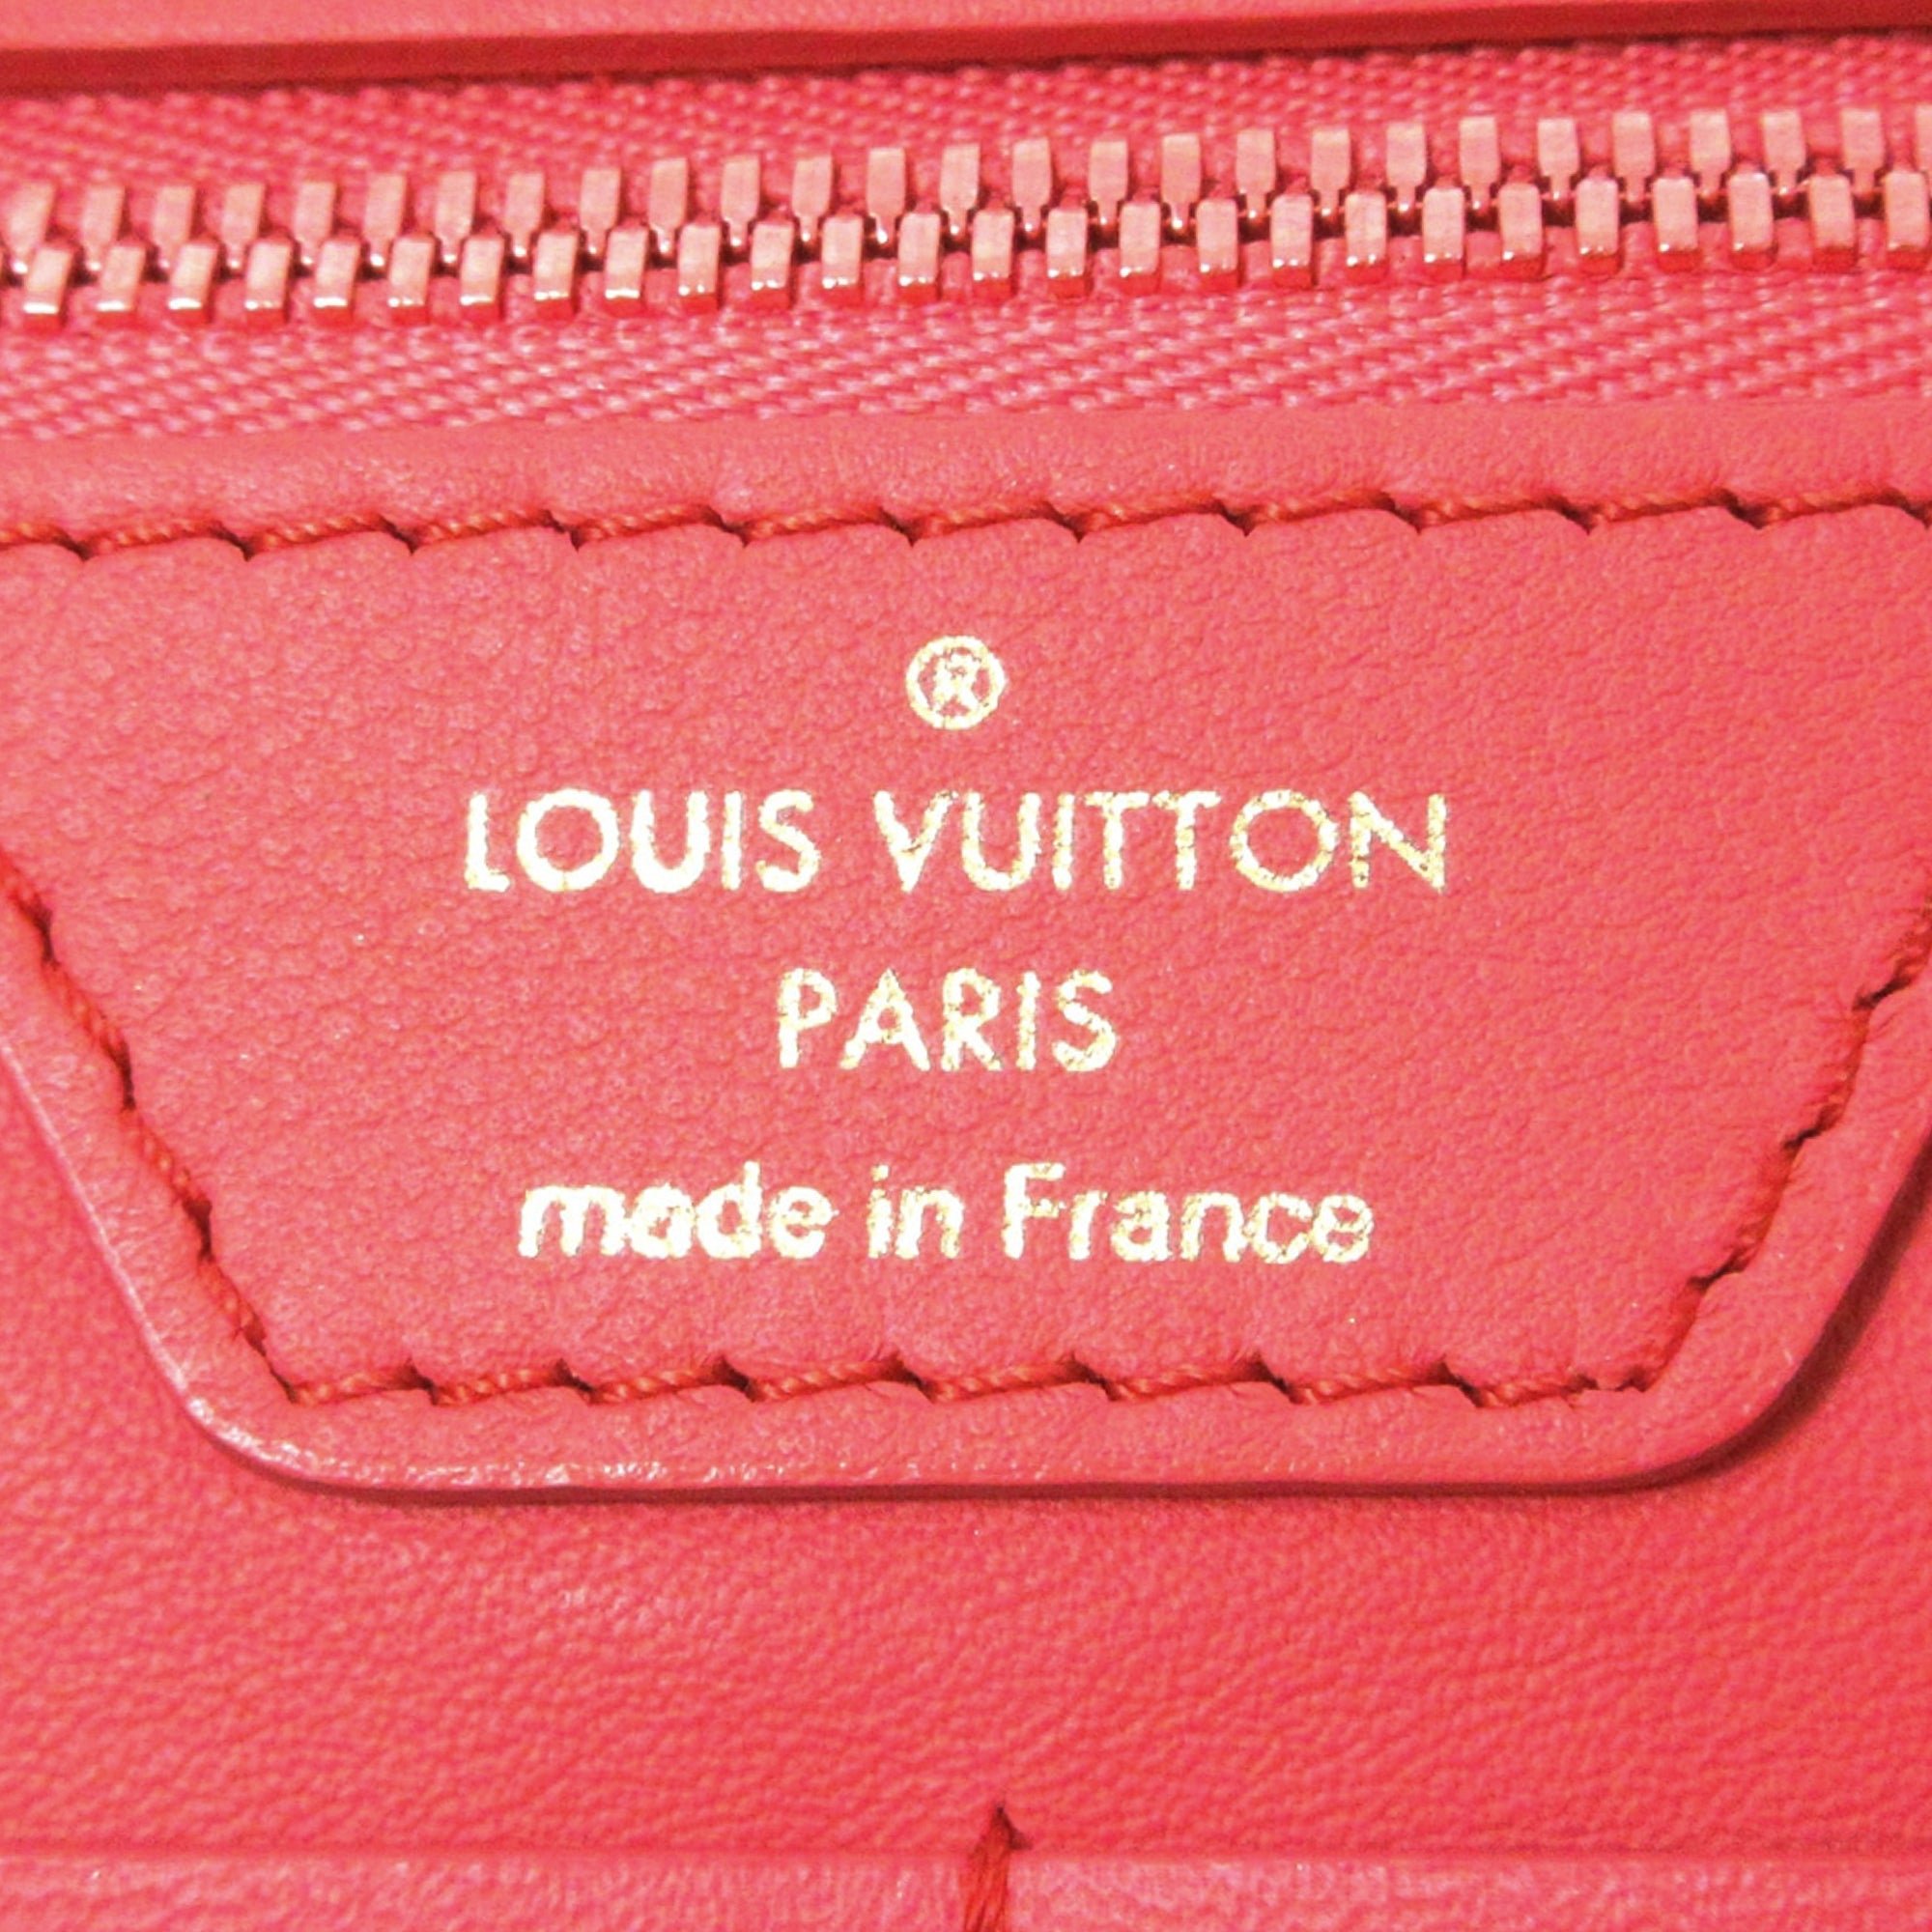 Louis Vuitton Masters x Jeff Koons Bag Collection, Bragmybag